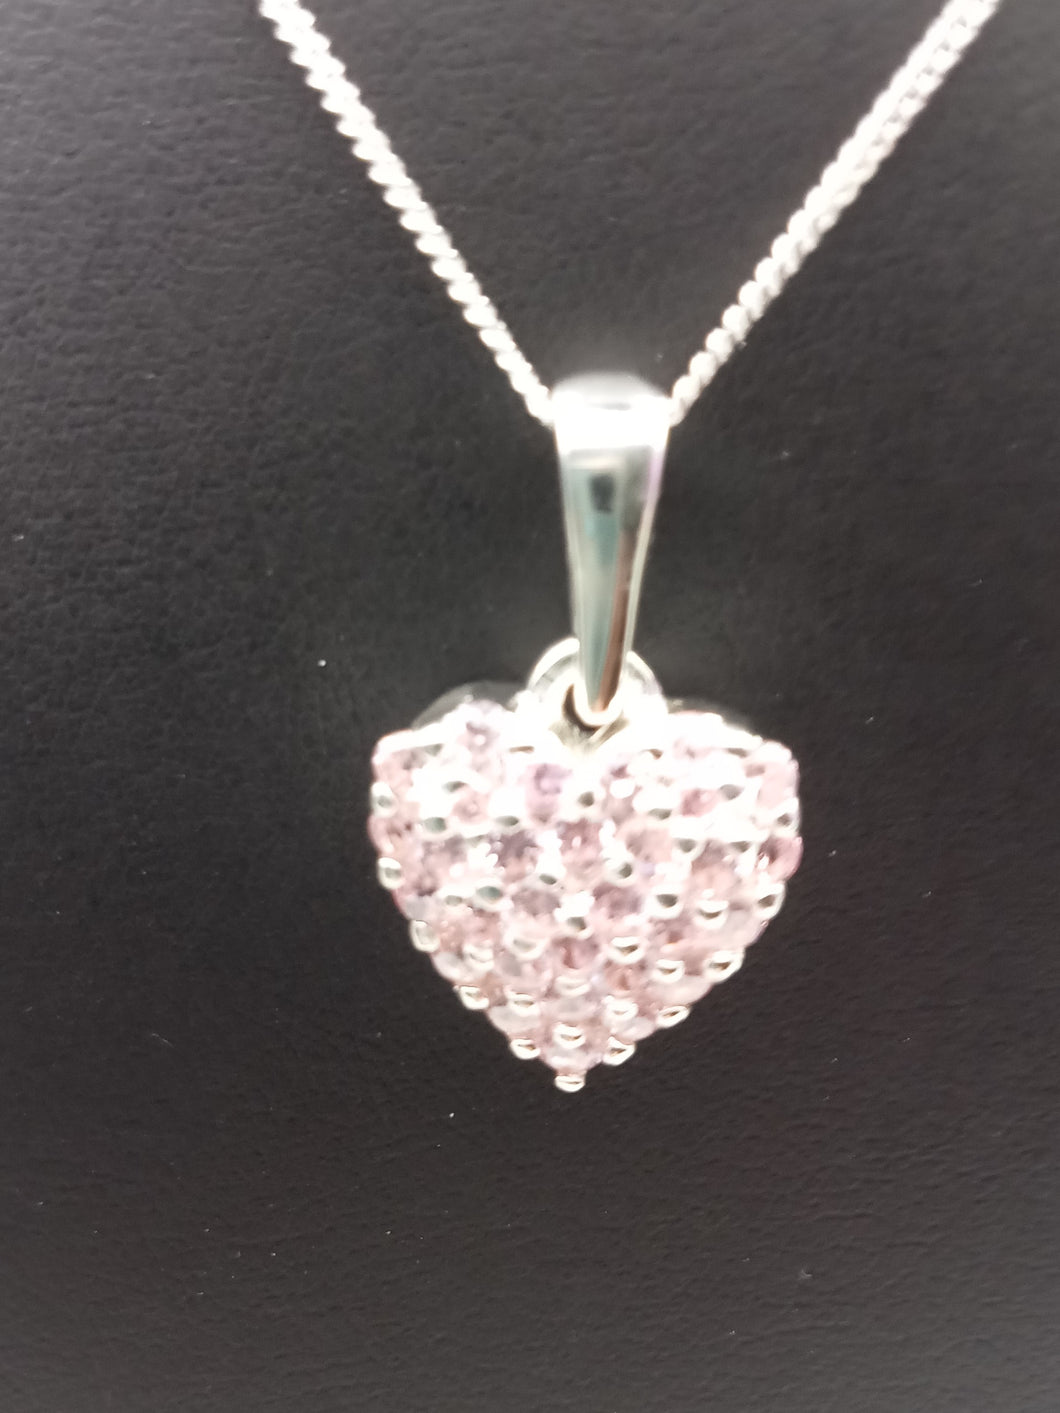 Stone encrusted heart pendant